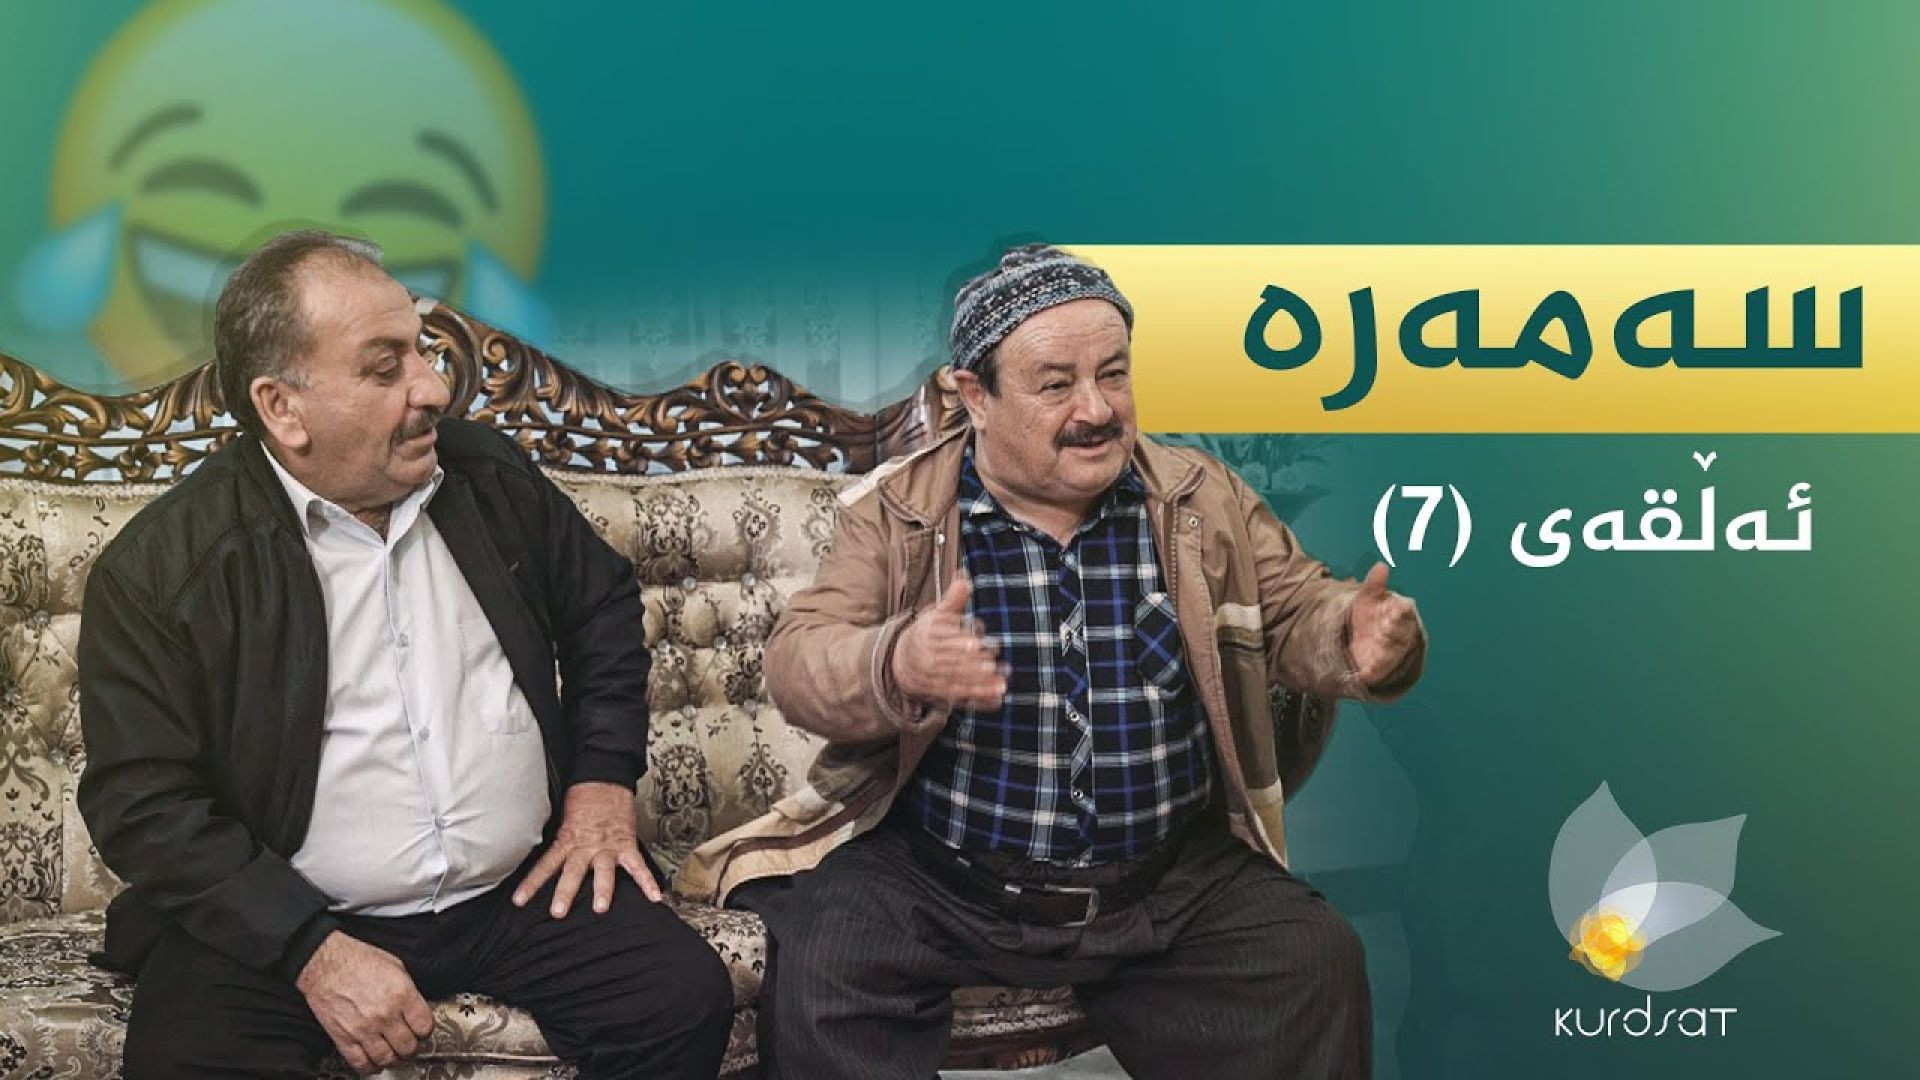 Kurdsat tv